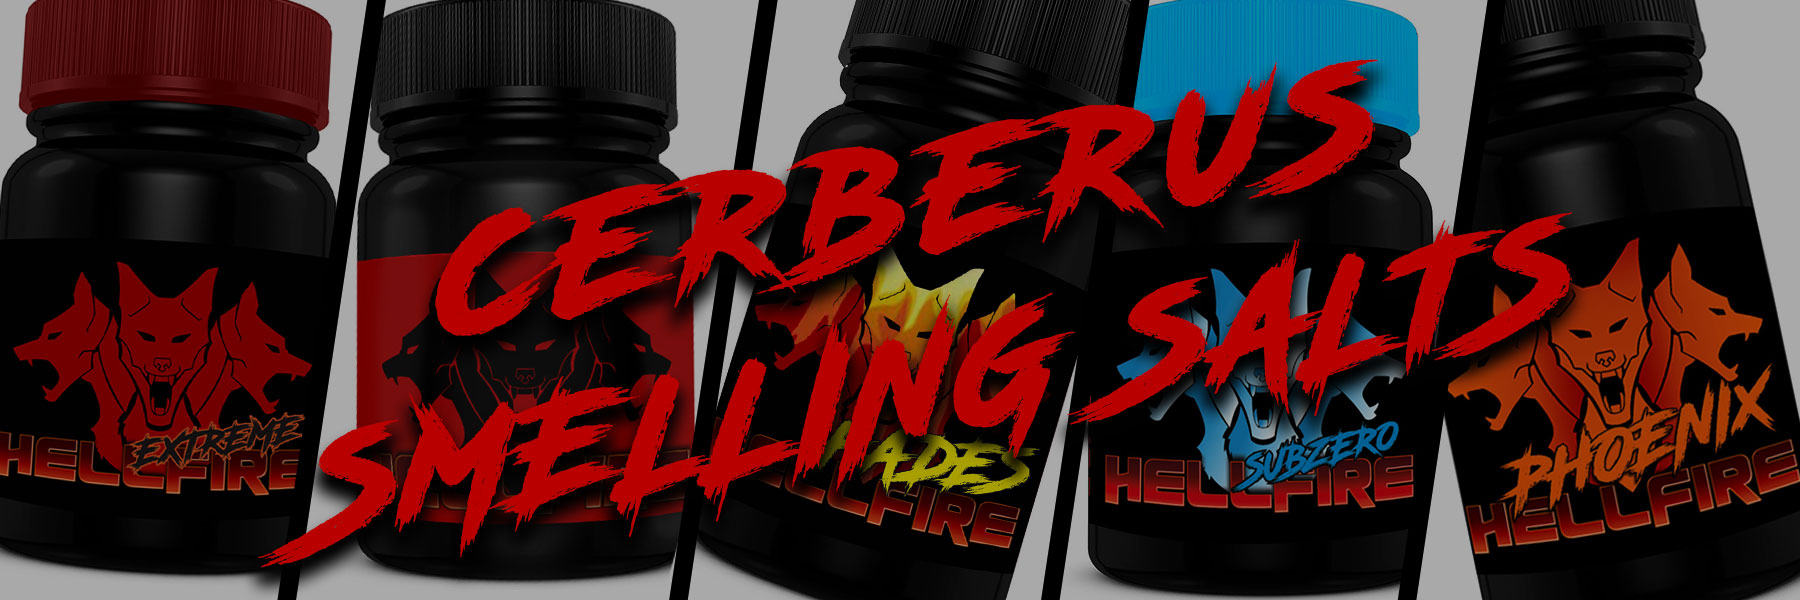 HELLFIRE Hades Smelling Salts – CERBERUS Strength Danmark